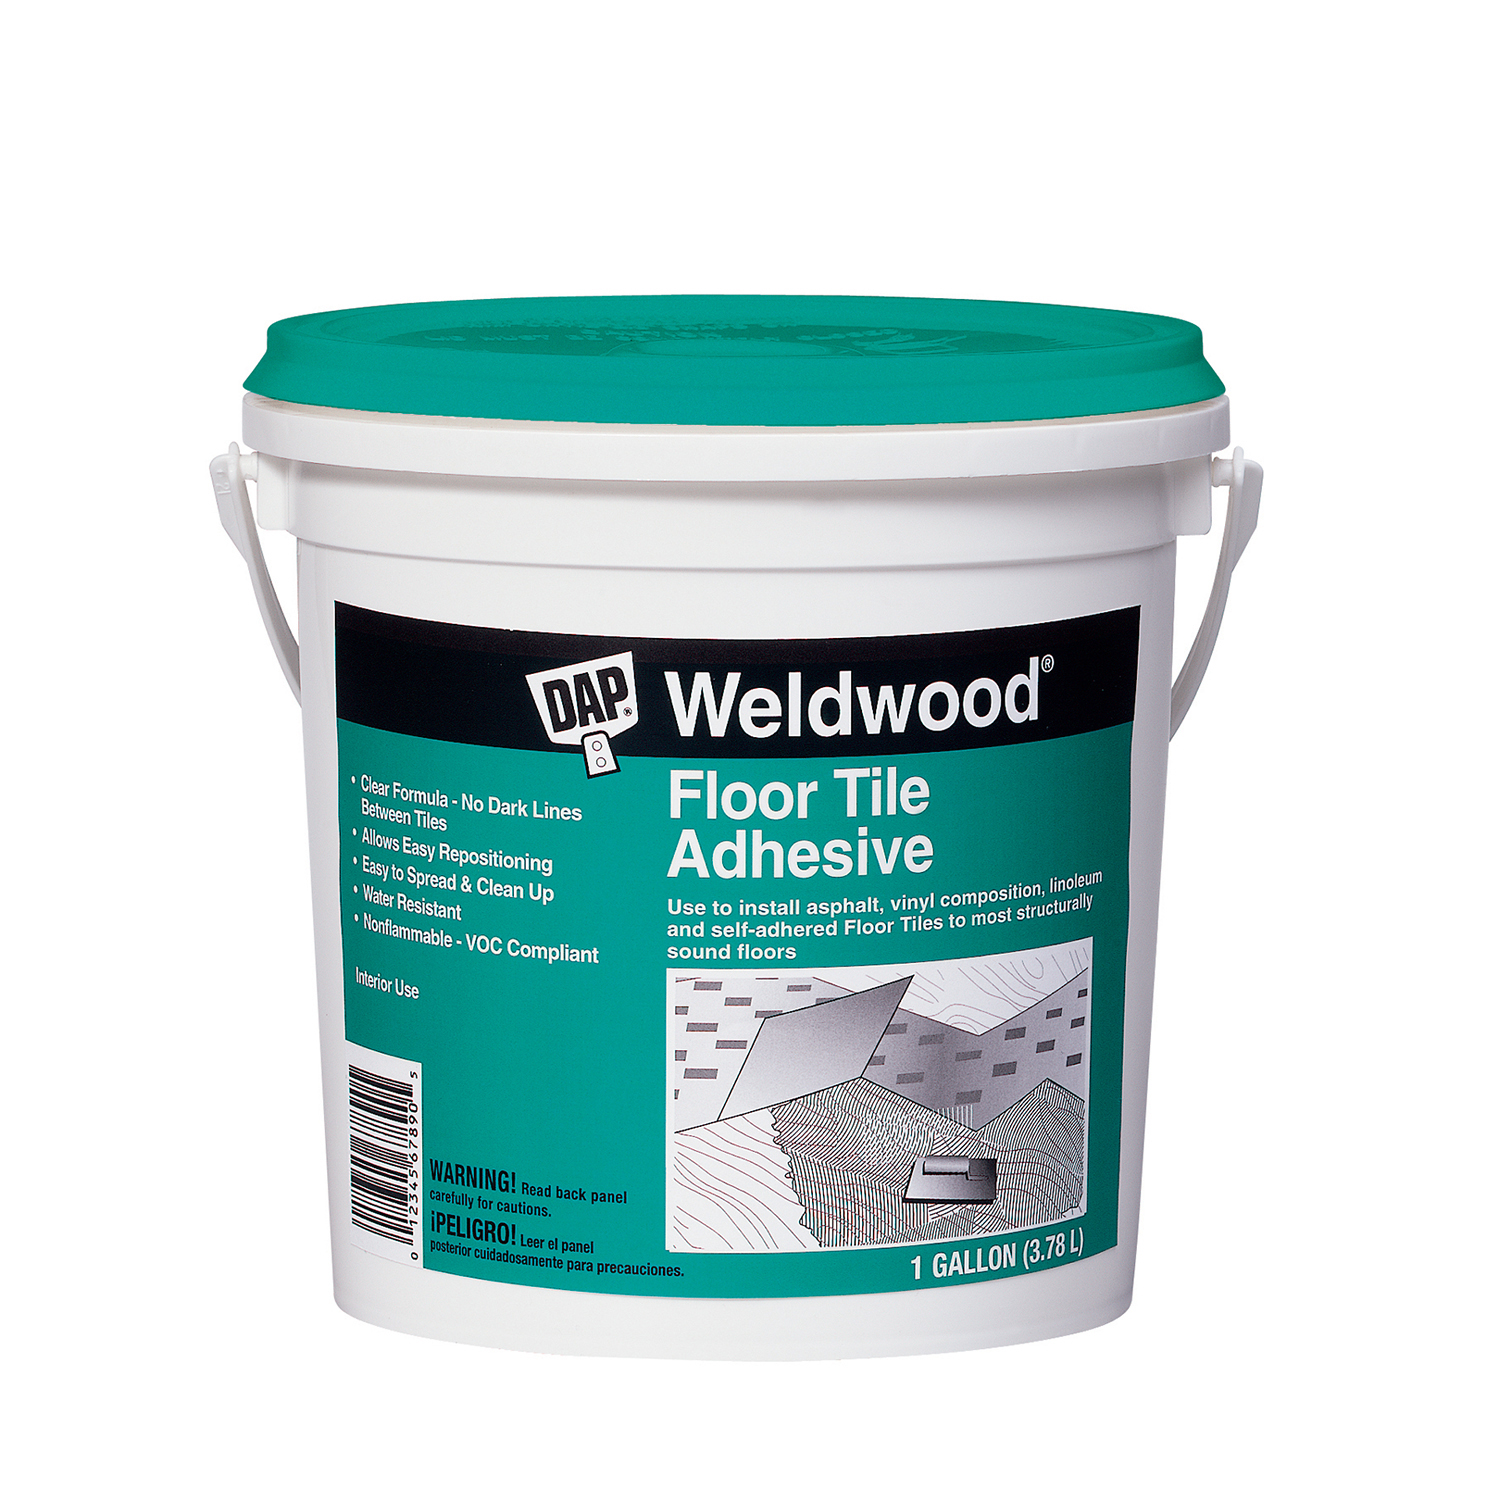 Weldwood Floor Tile Adhesive Dap S, What Glue To Use For Vinyl Floor Tiles